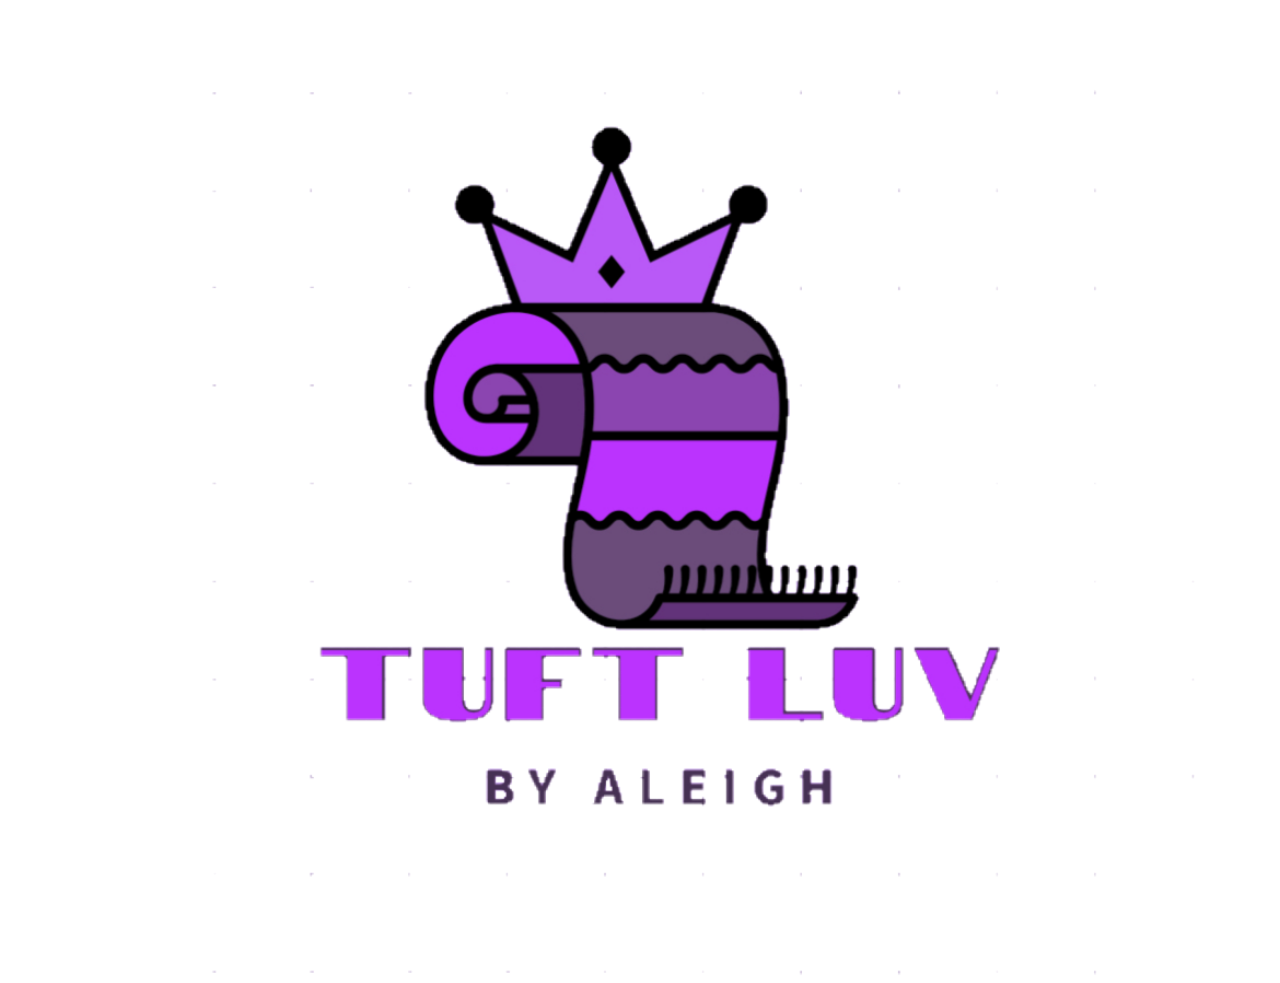 Tuft Luv's logo